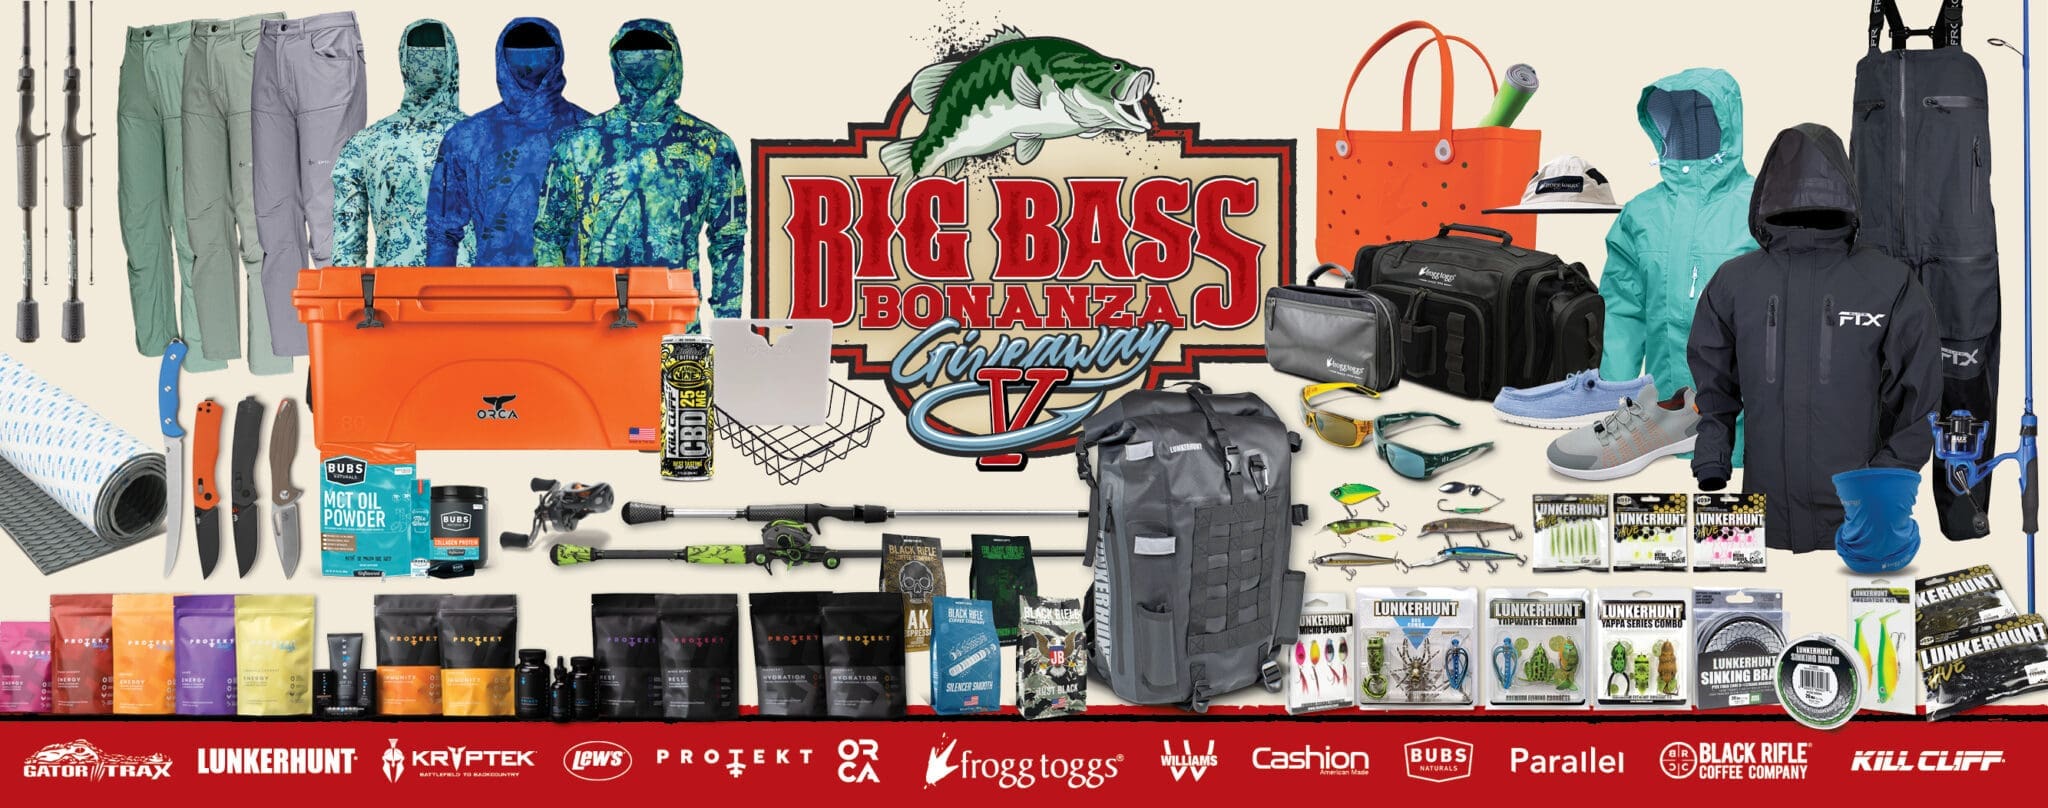 big bass bonanza giveaway